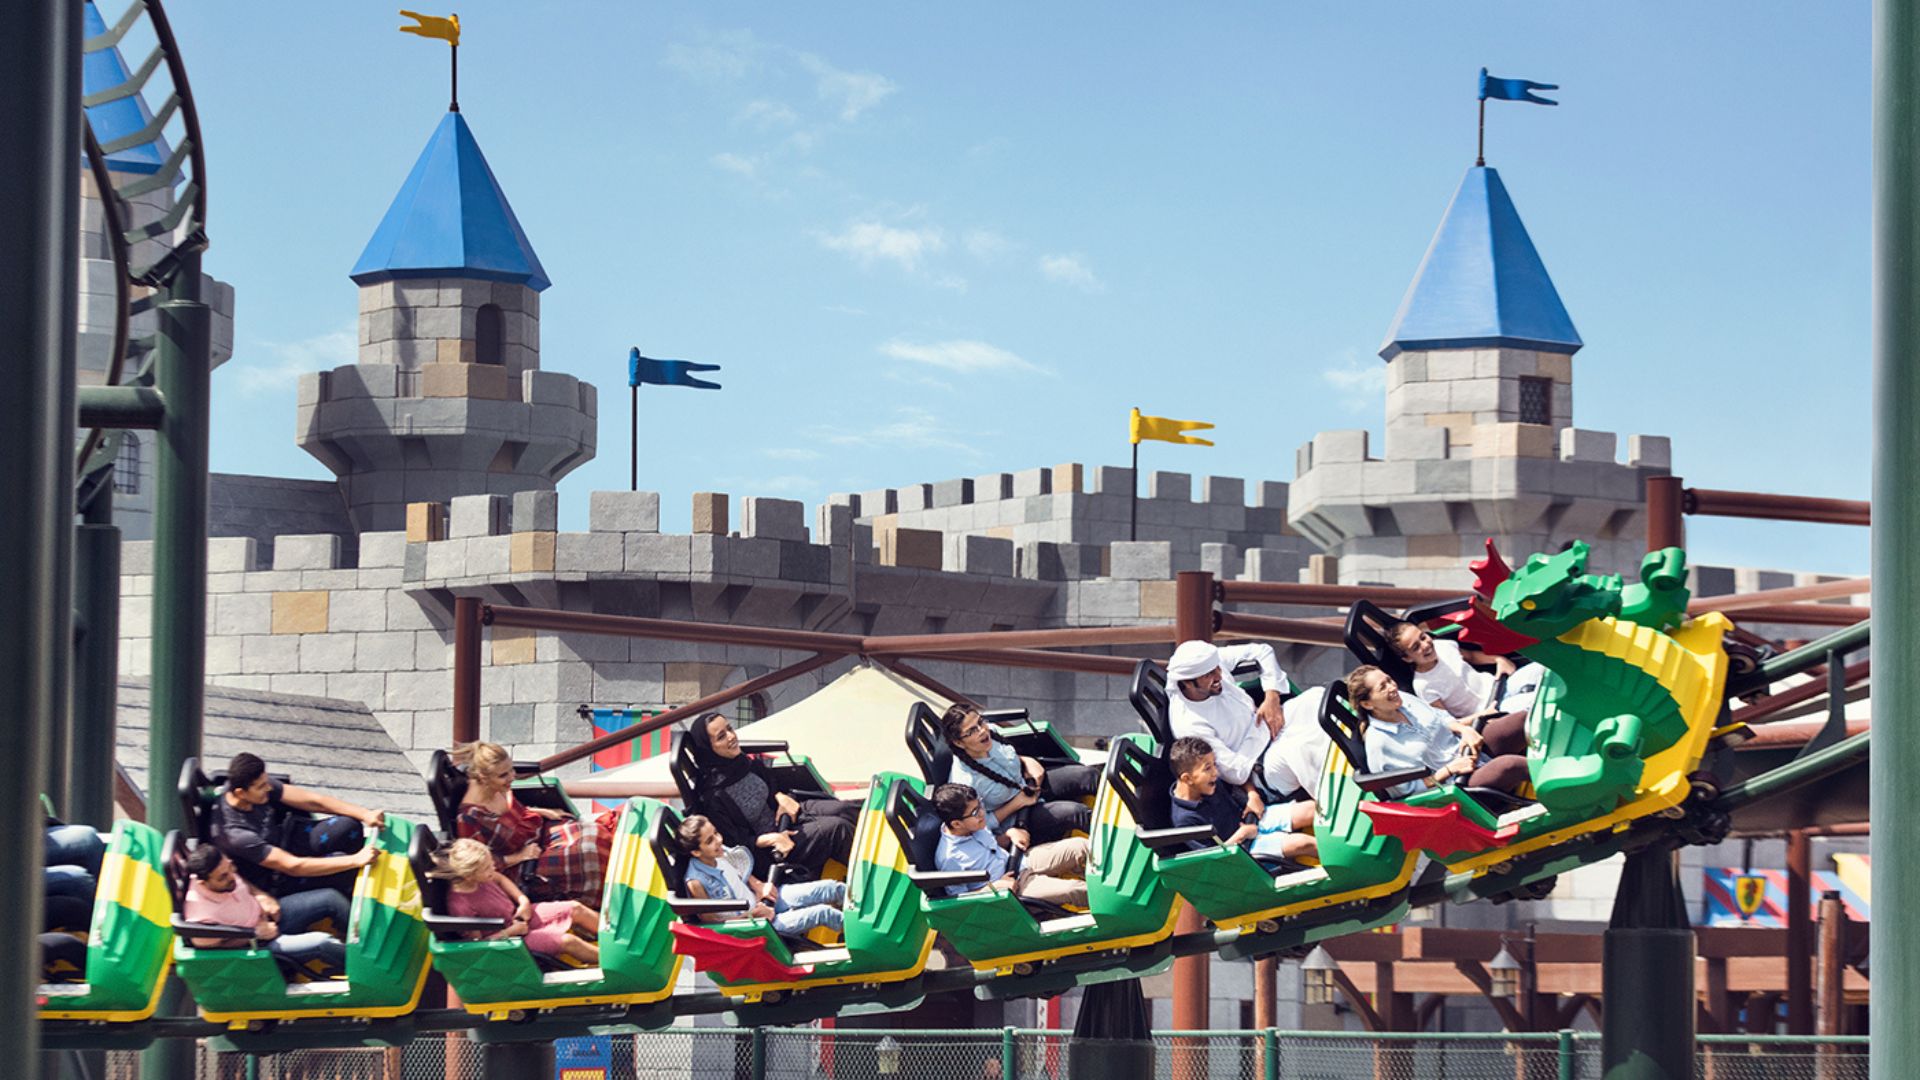 Dragon Roller Coaster at Legoland Dubai